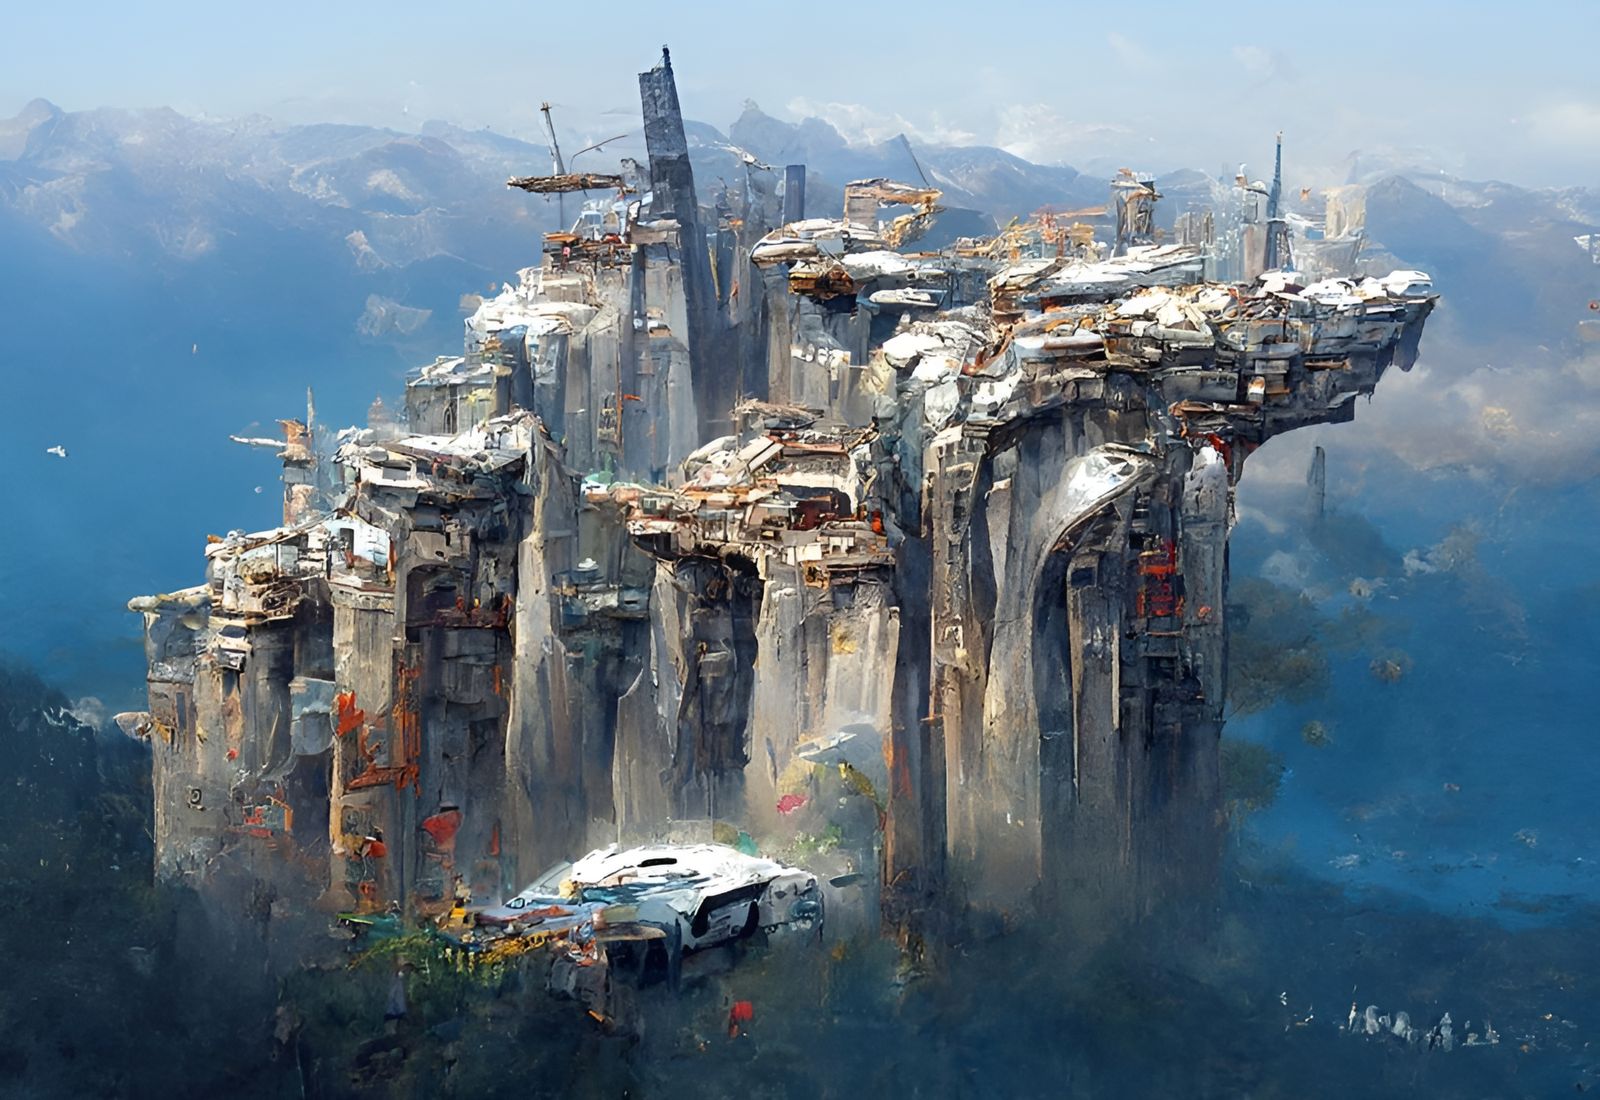 Futuristic civilisation rebuilding on apocalypse ruins